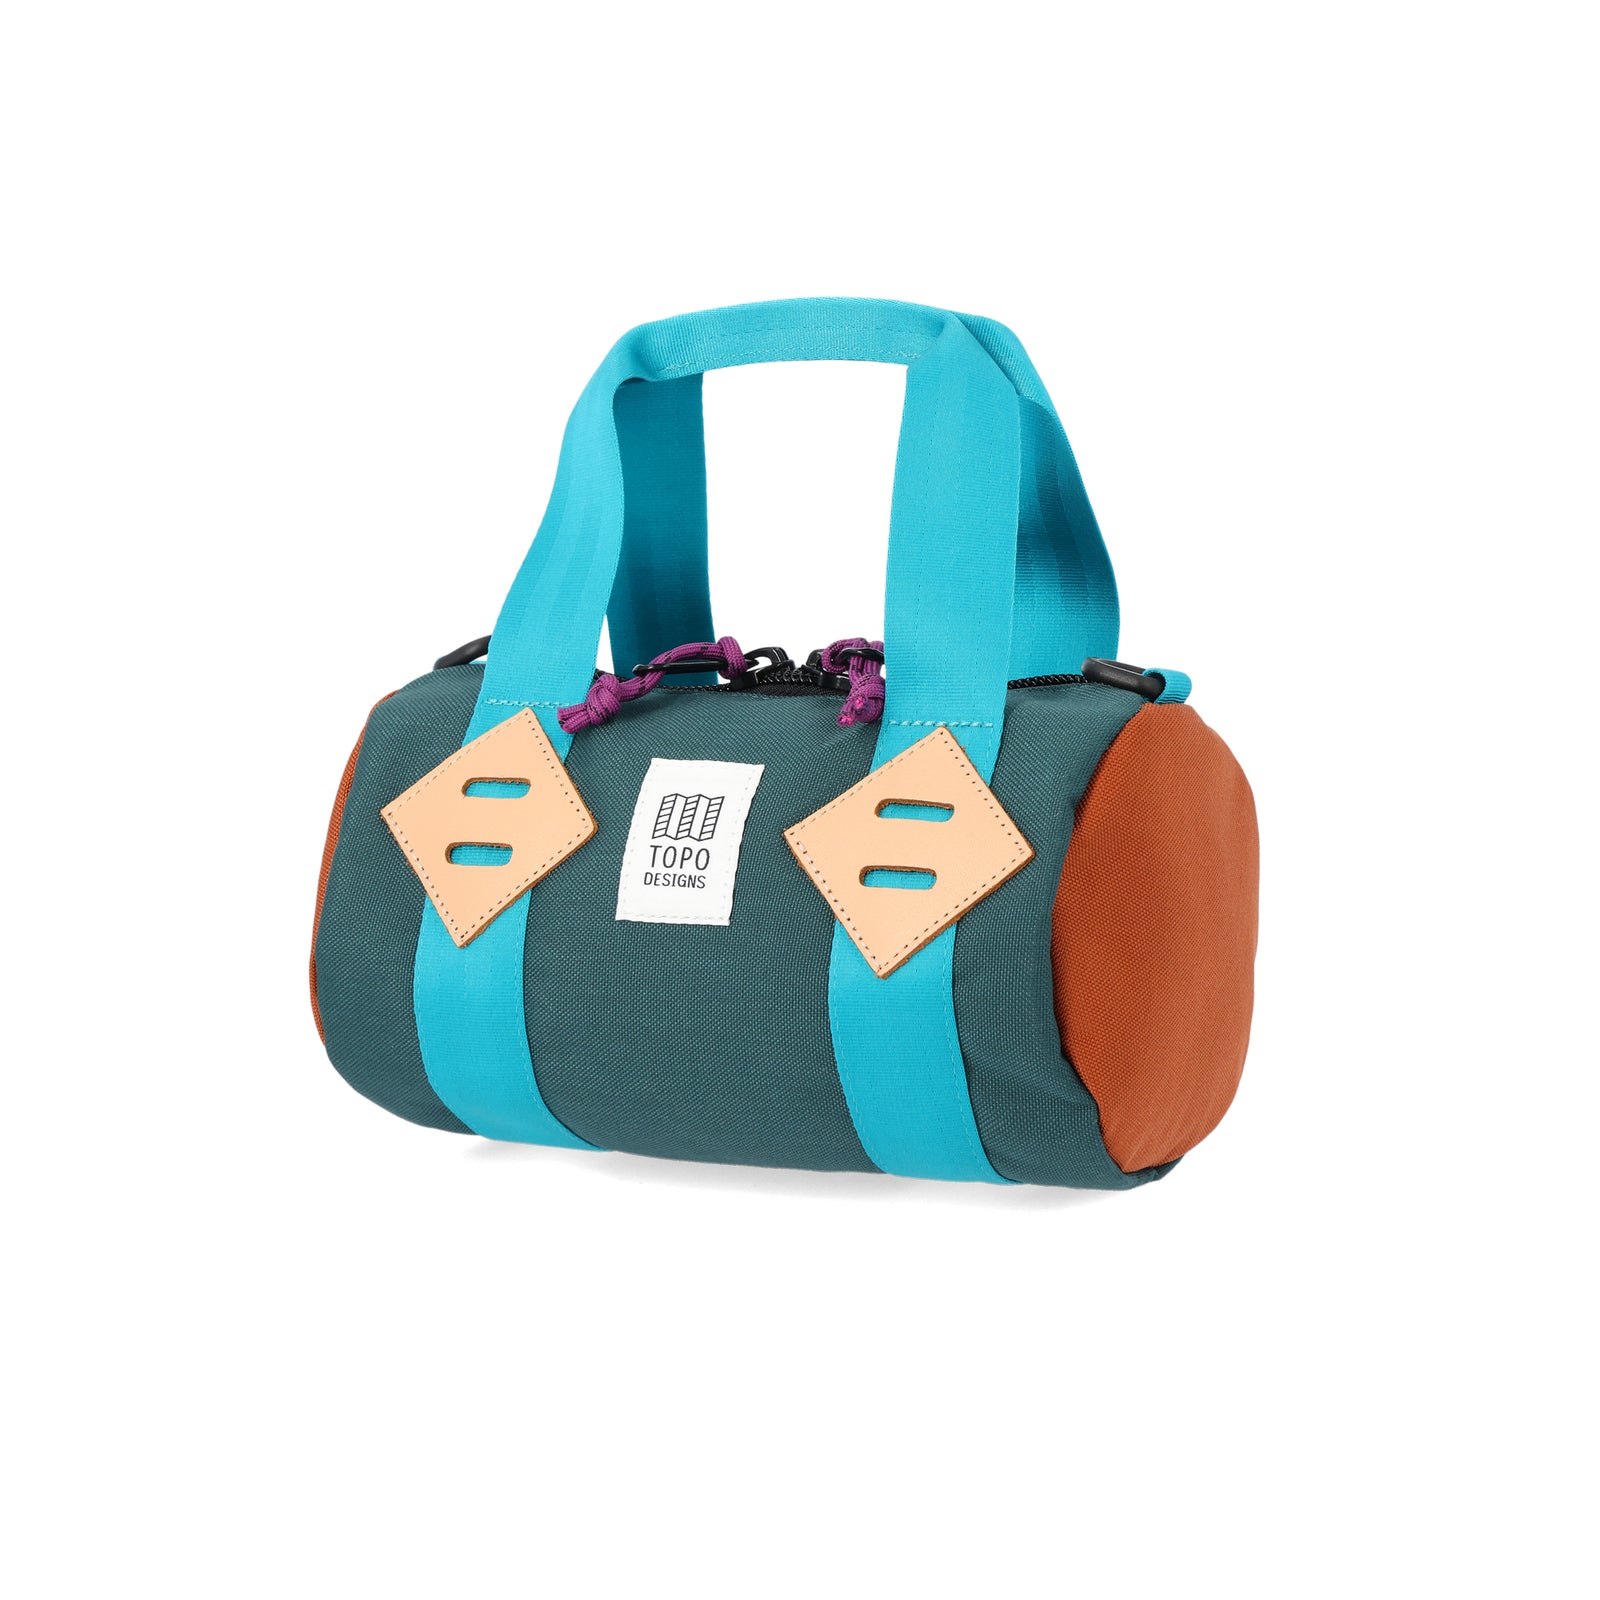 Topo Designs Mini Classic Duffel Bag shoulder crossbody purse in recycled "Botanic Green / Clay" nylon.